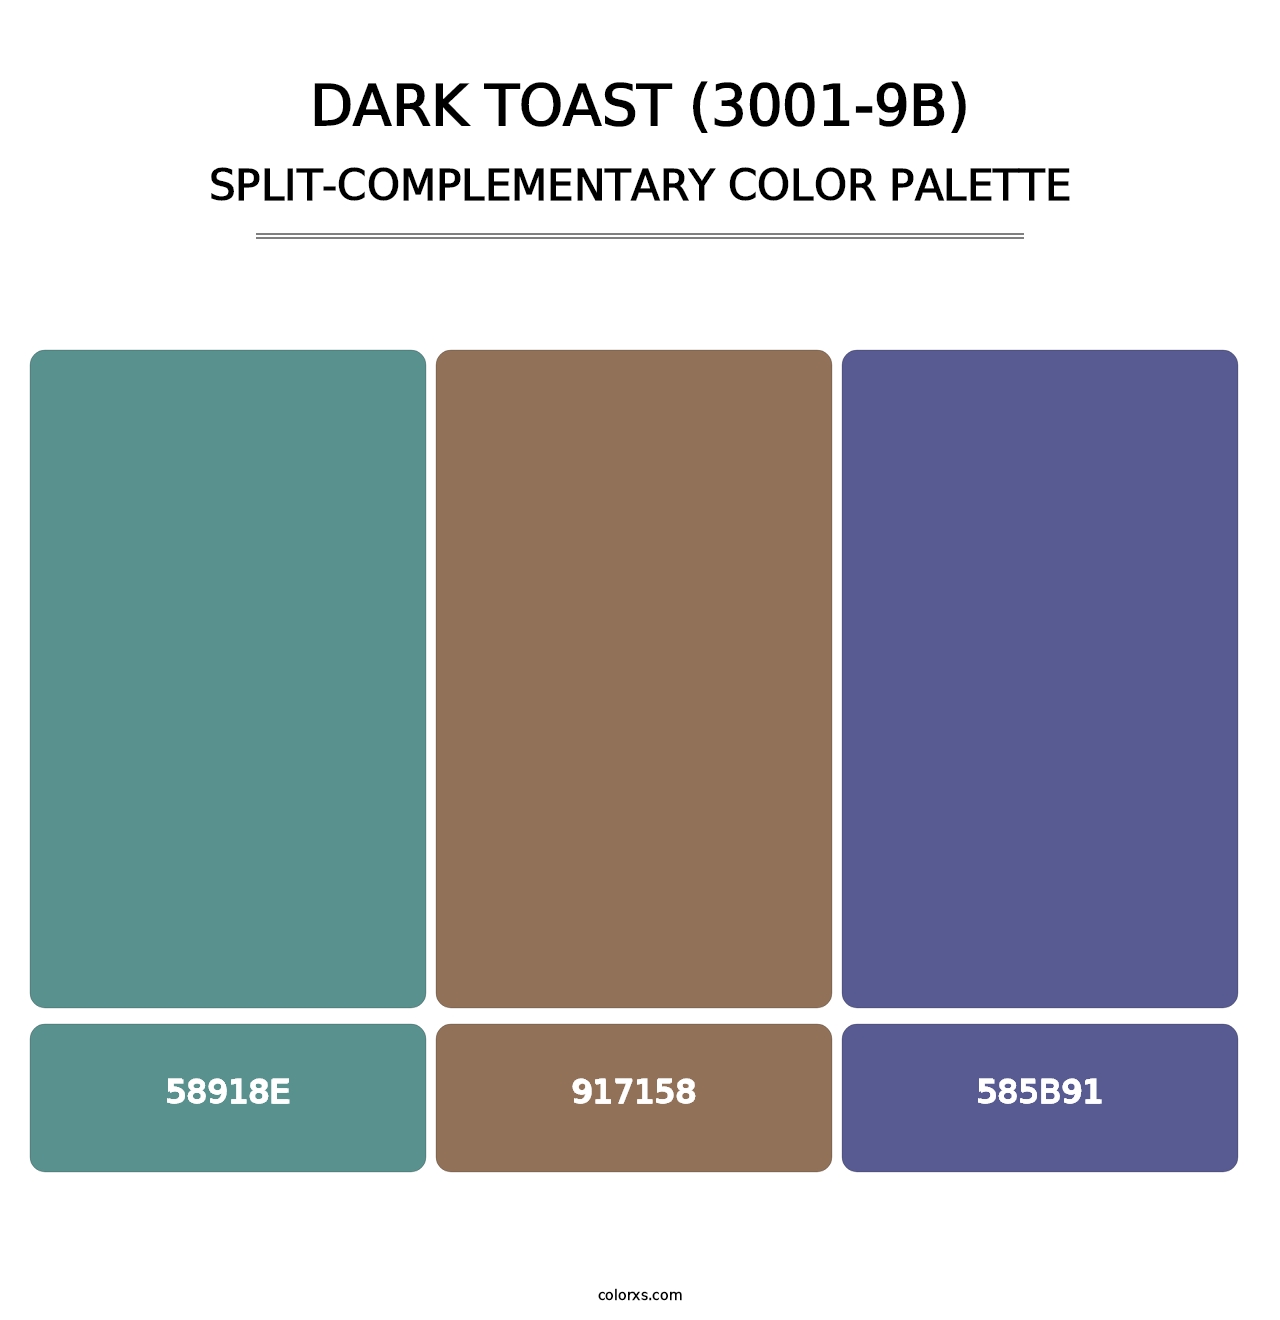 Dark Toast (3001-9B) - Split-Complementary Color Palette